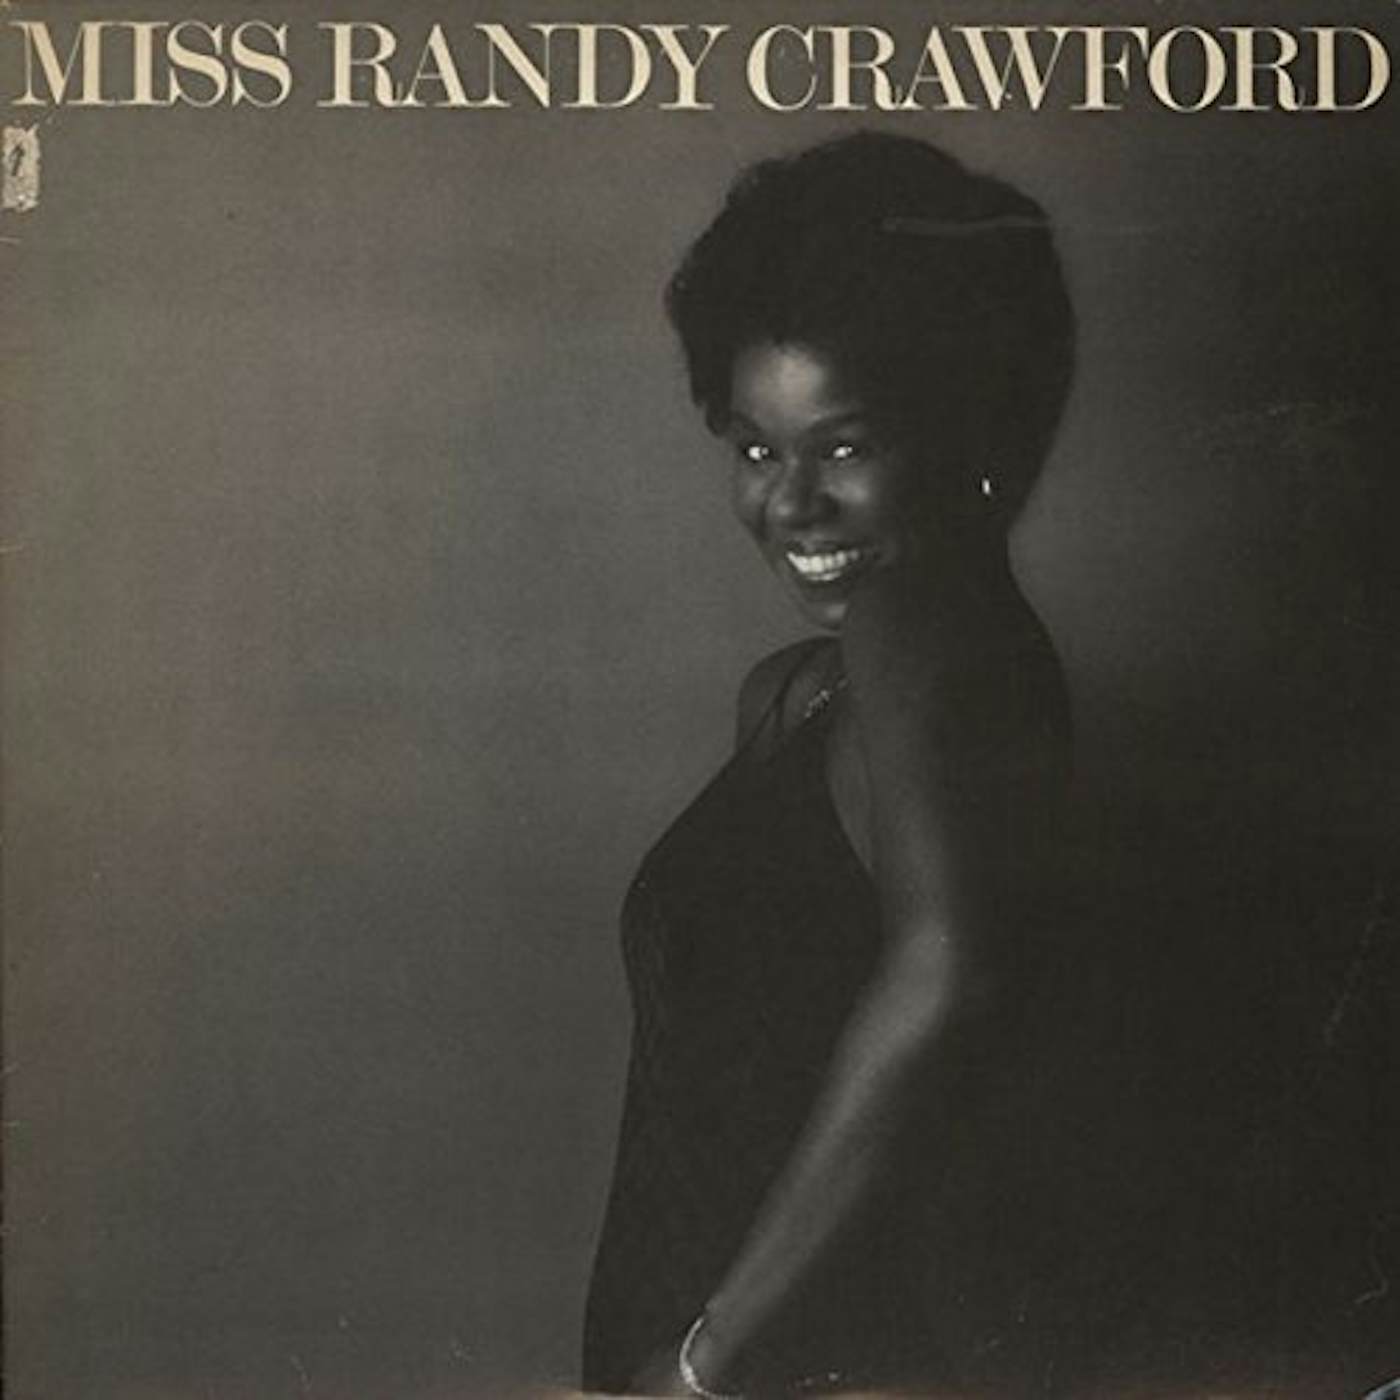 MISS RANDY CRAWFORD CD